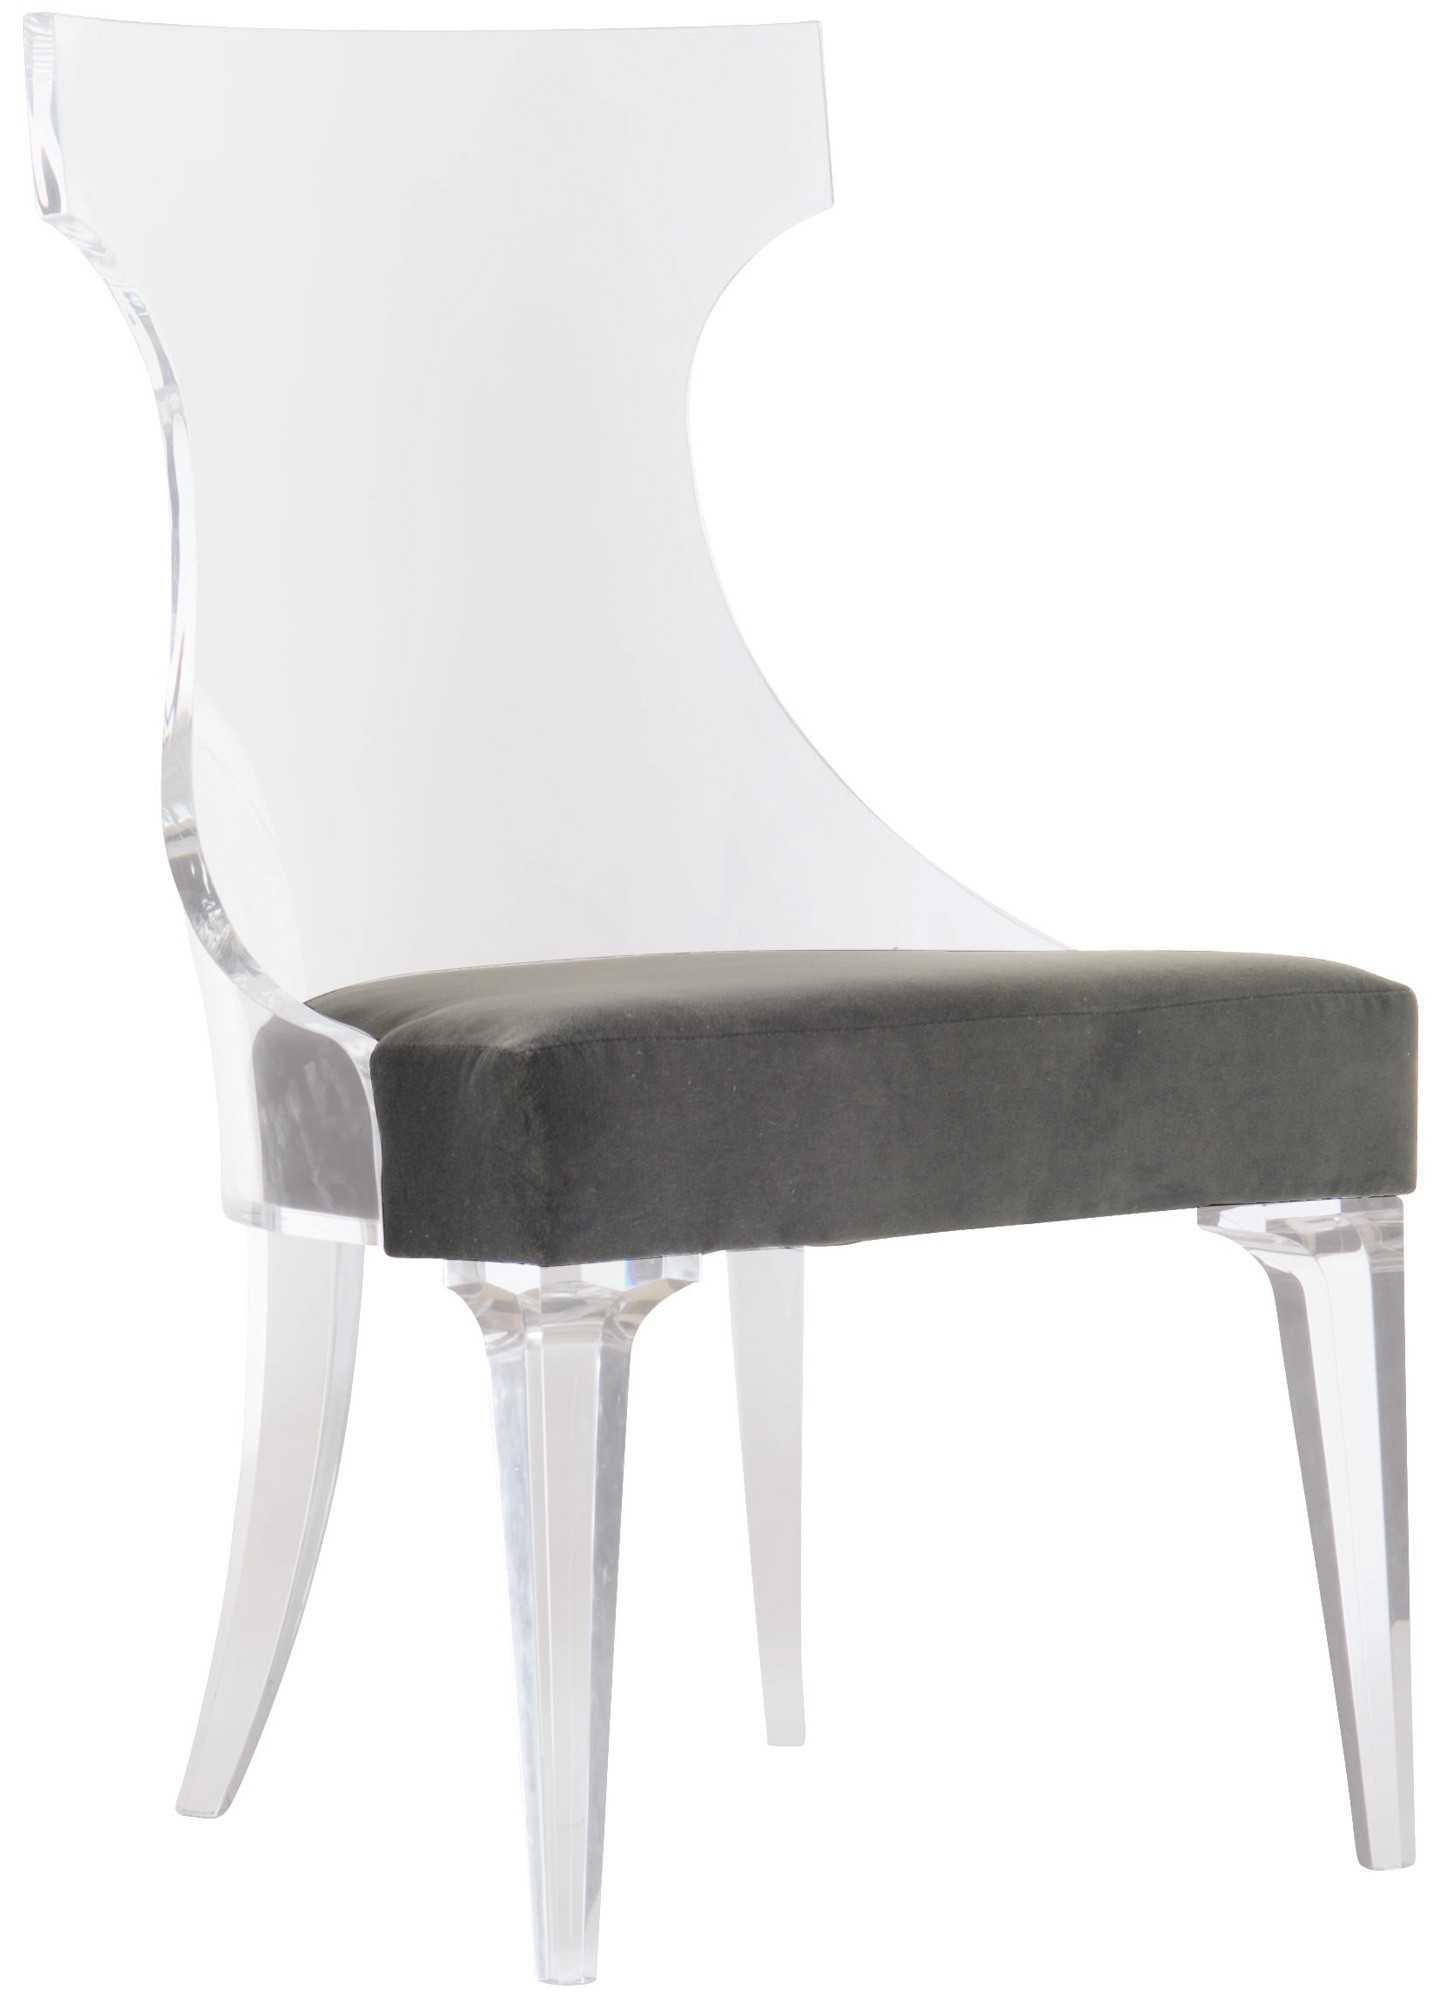 Acrylic dining chair bernhardt